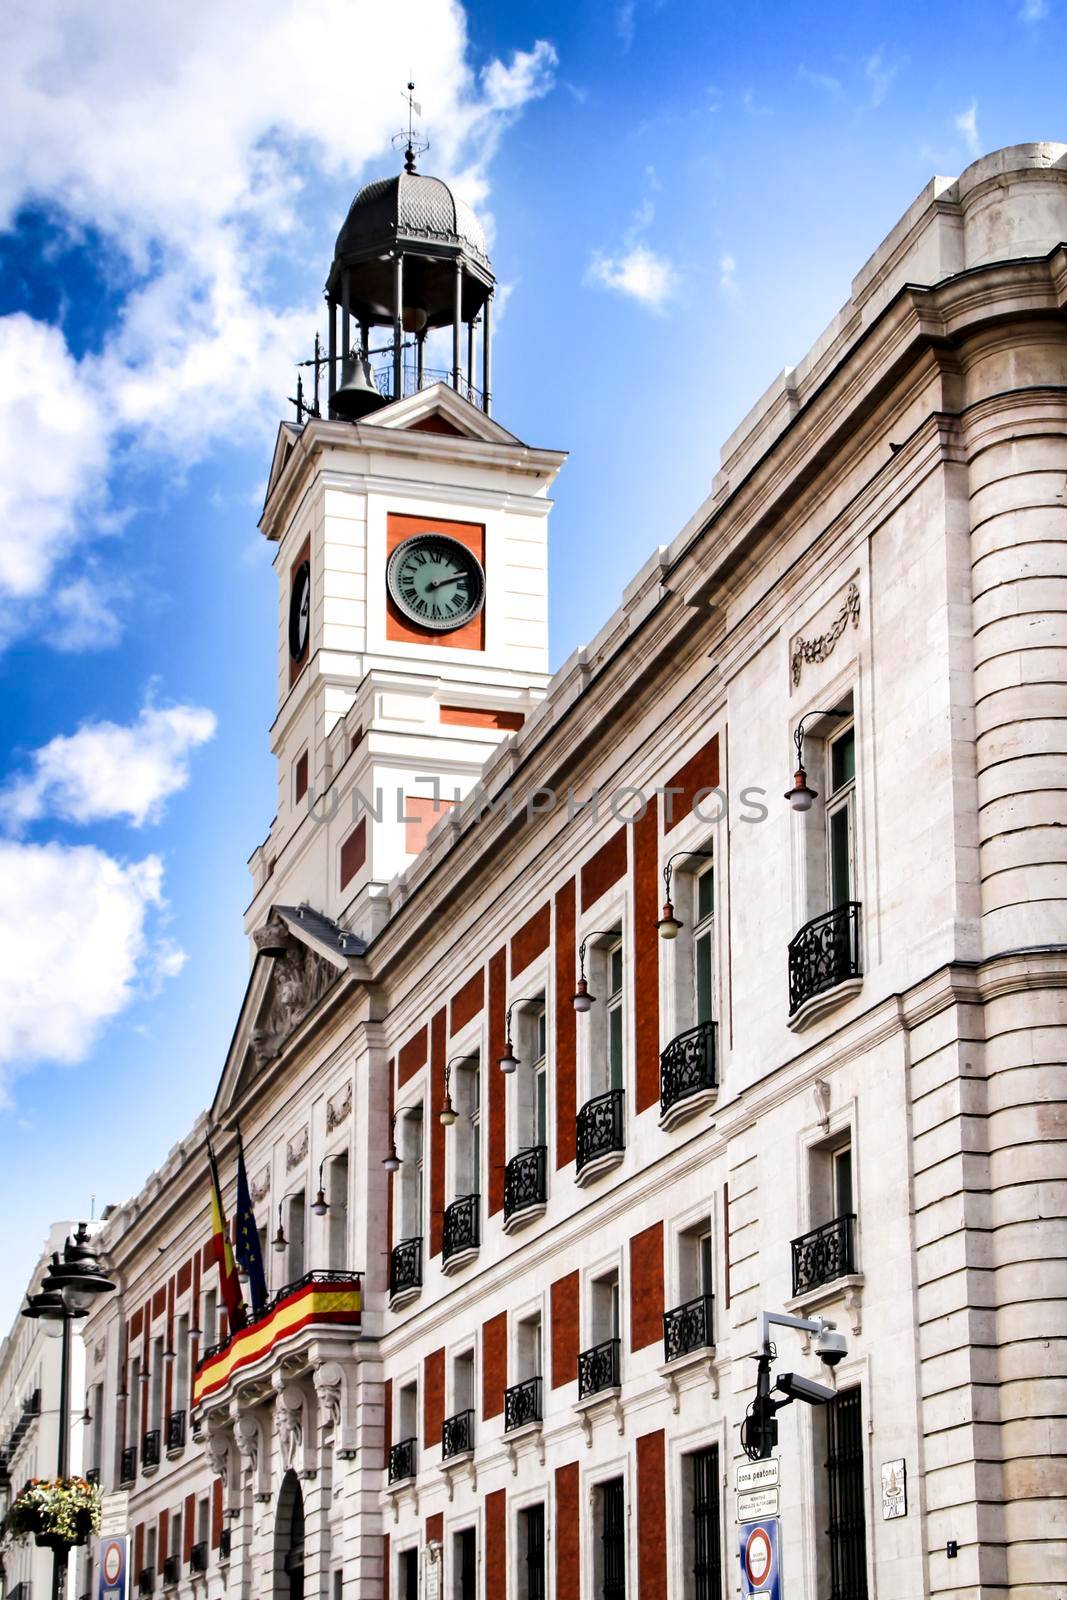 Beautiful clock tower of La Puerta del Sol square in Madrid by soniabonet